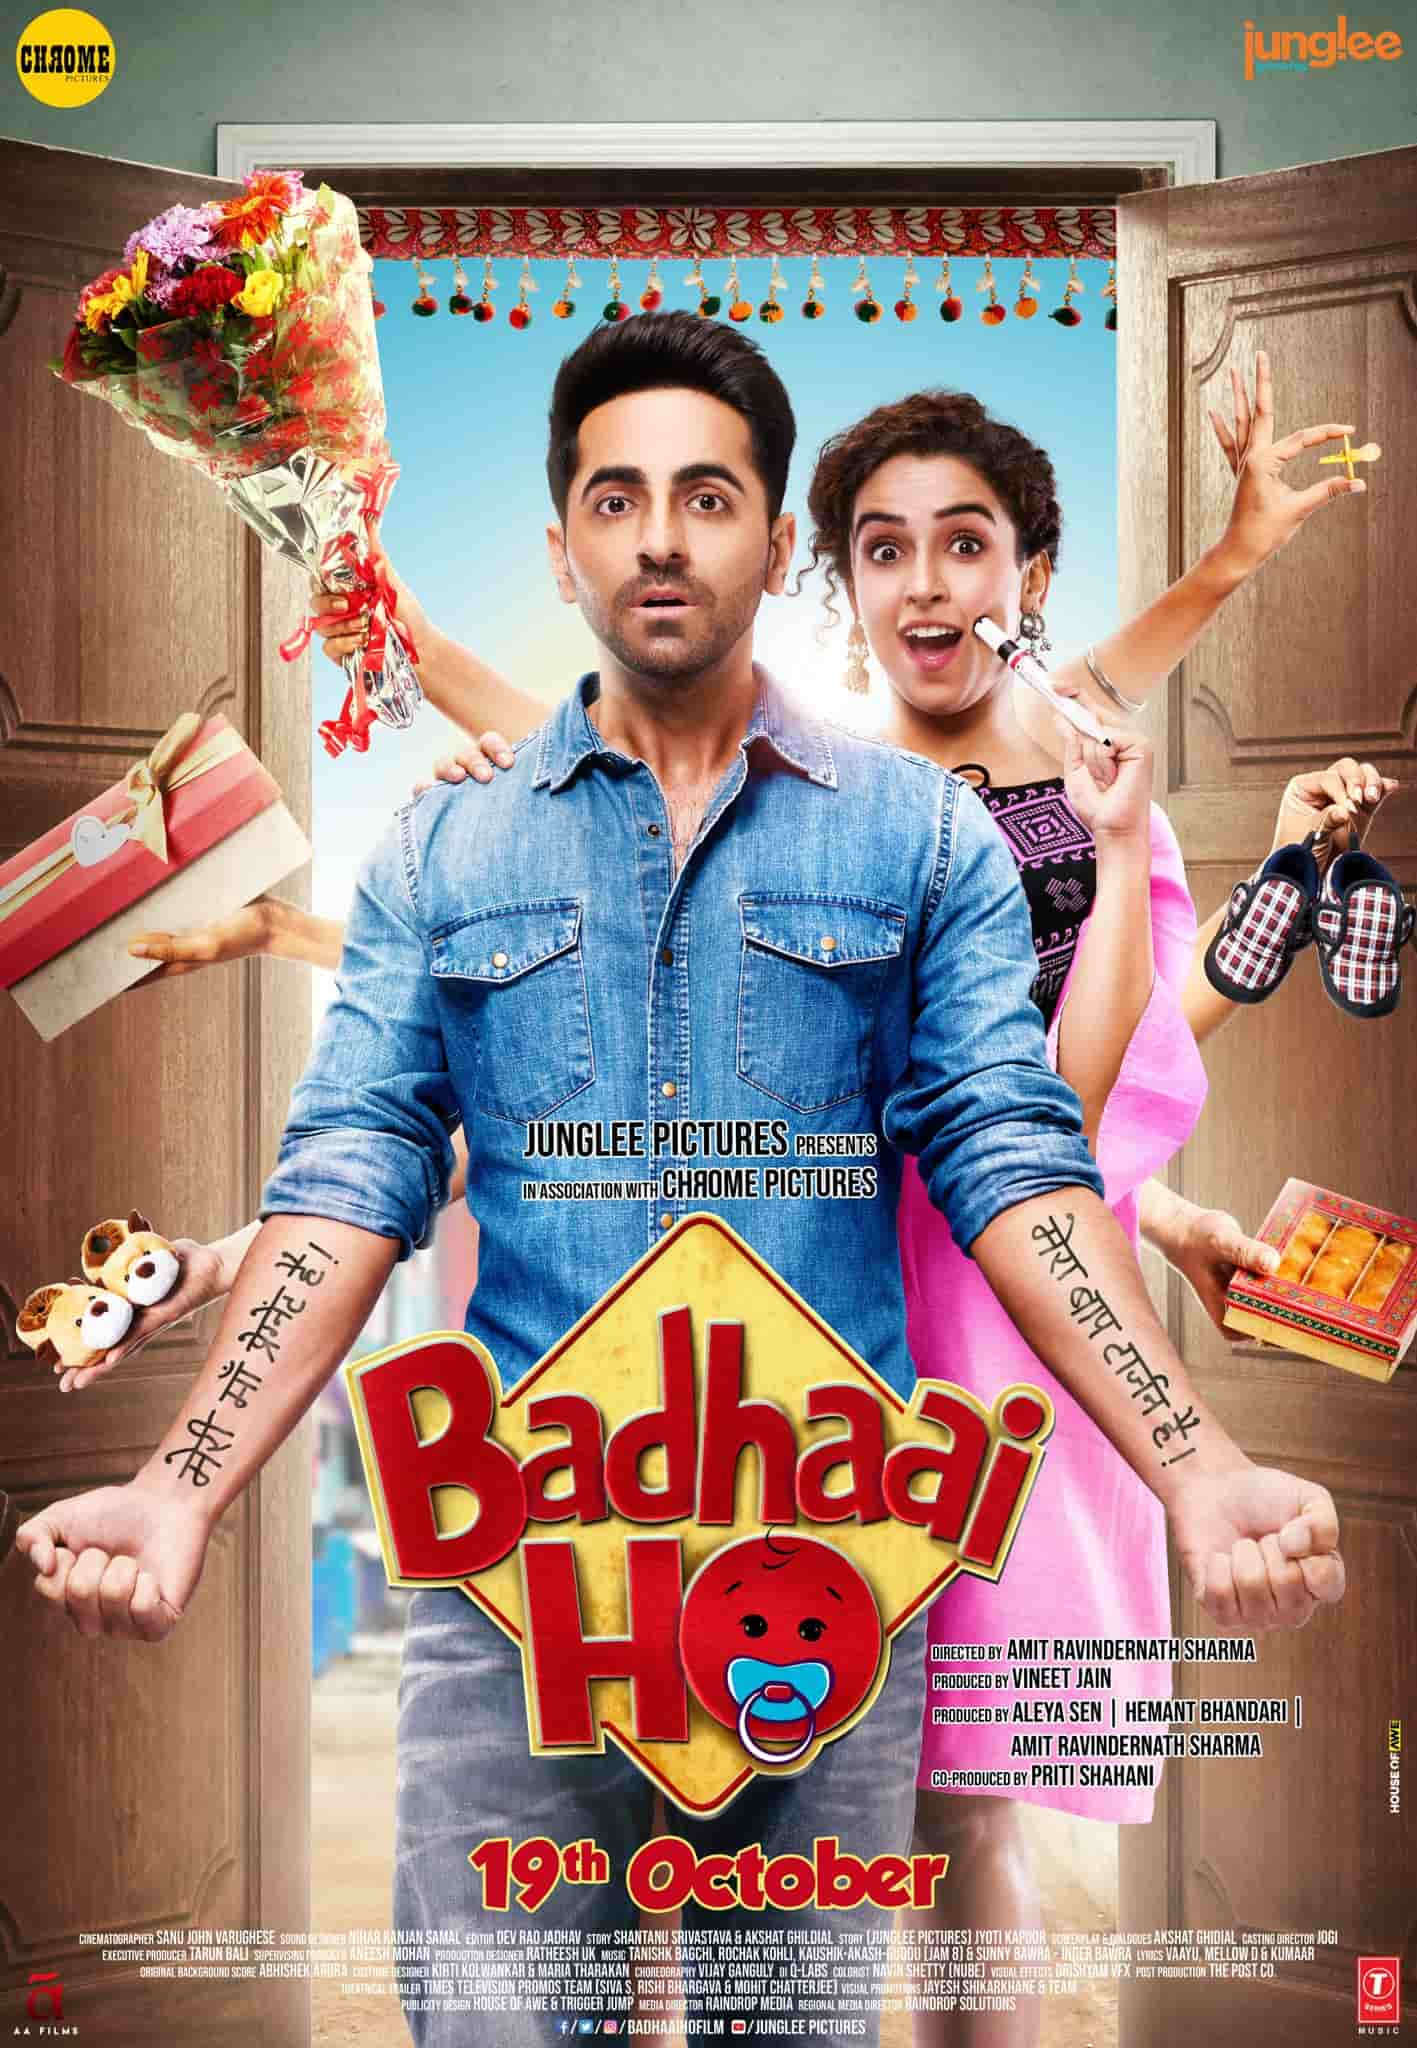 Must Watch Bollywood Movie: Badhaai Ho